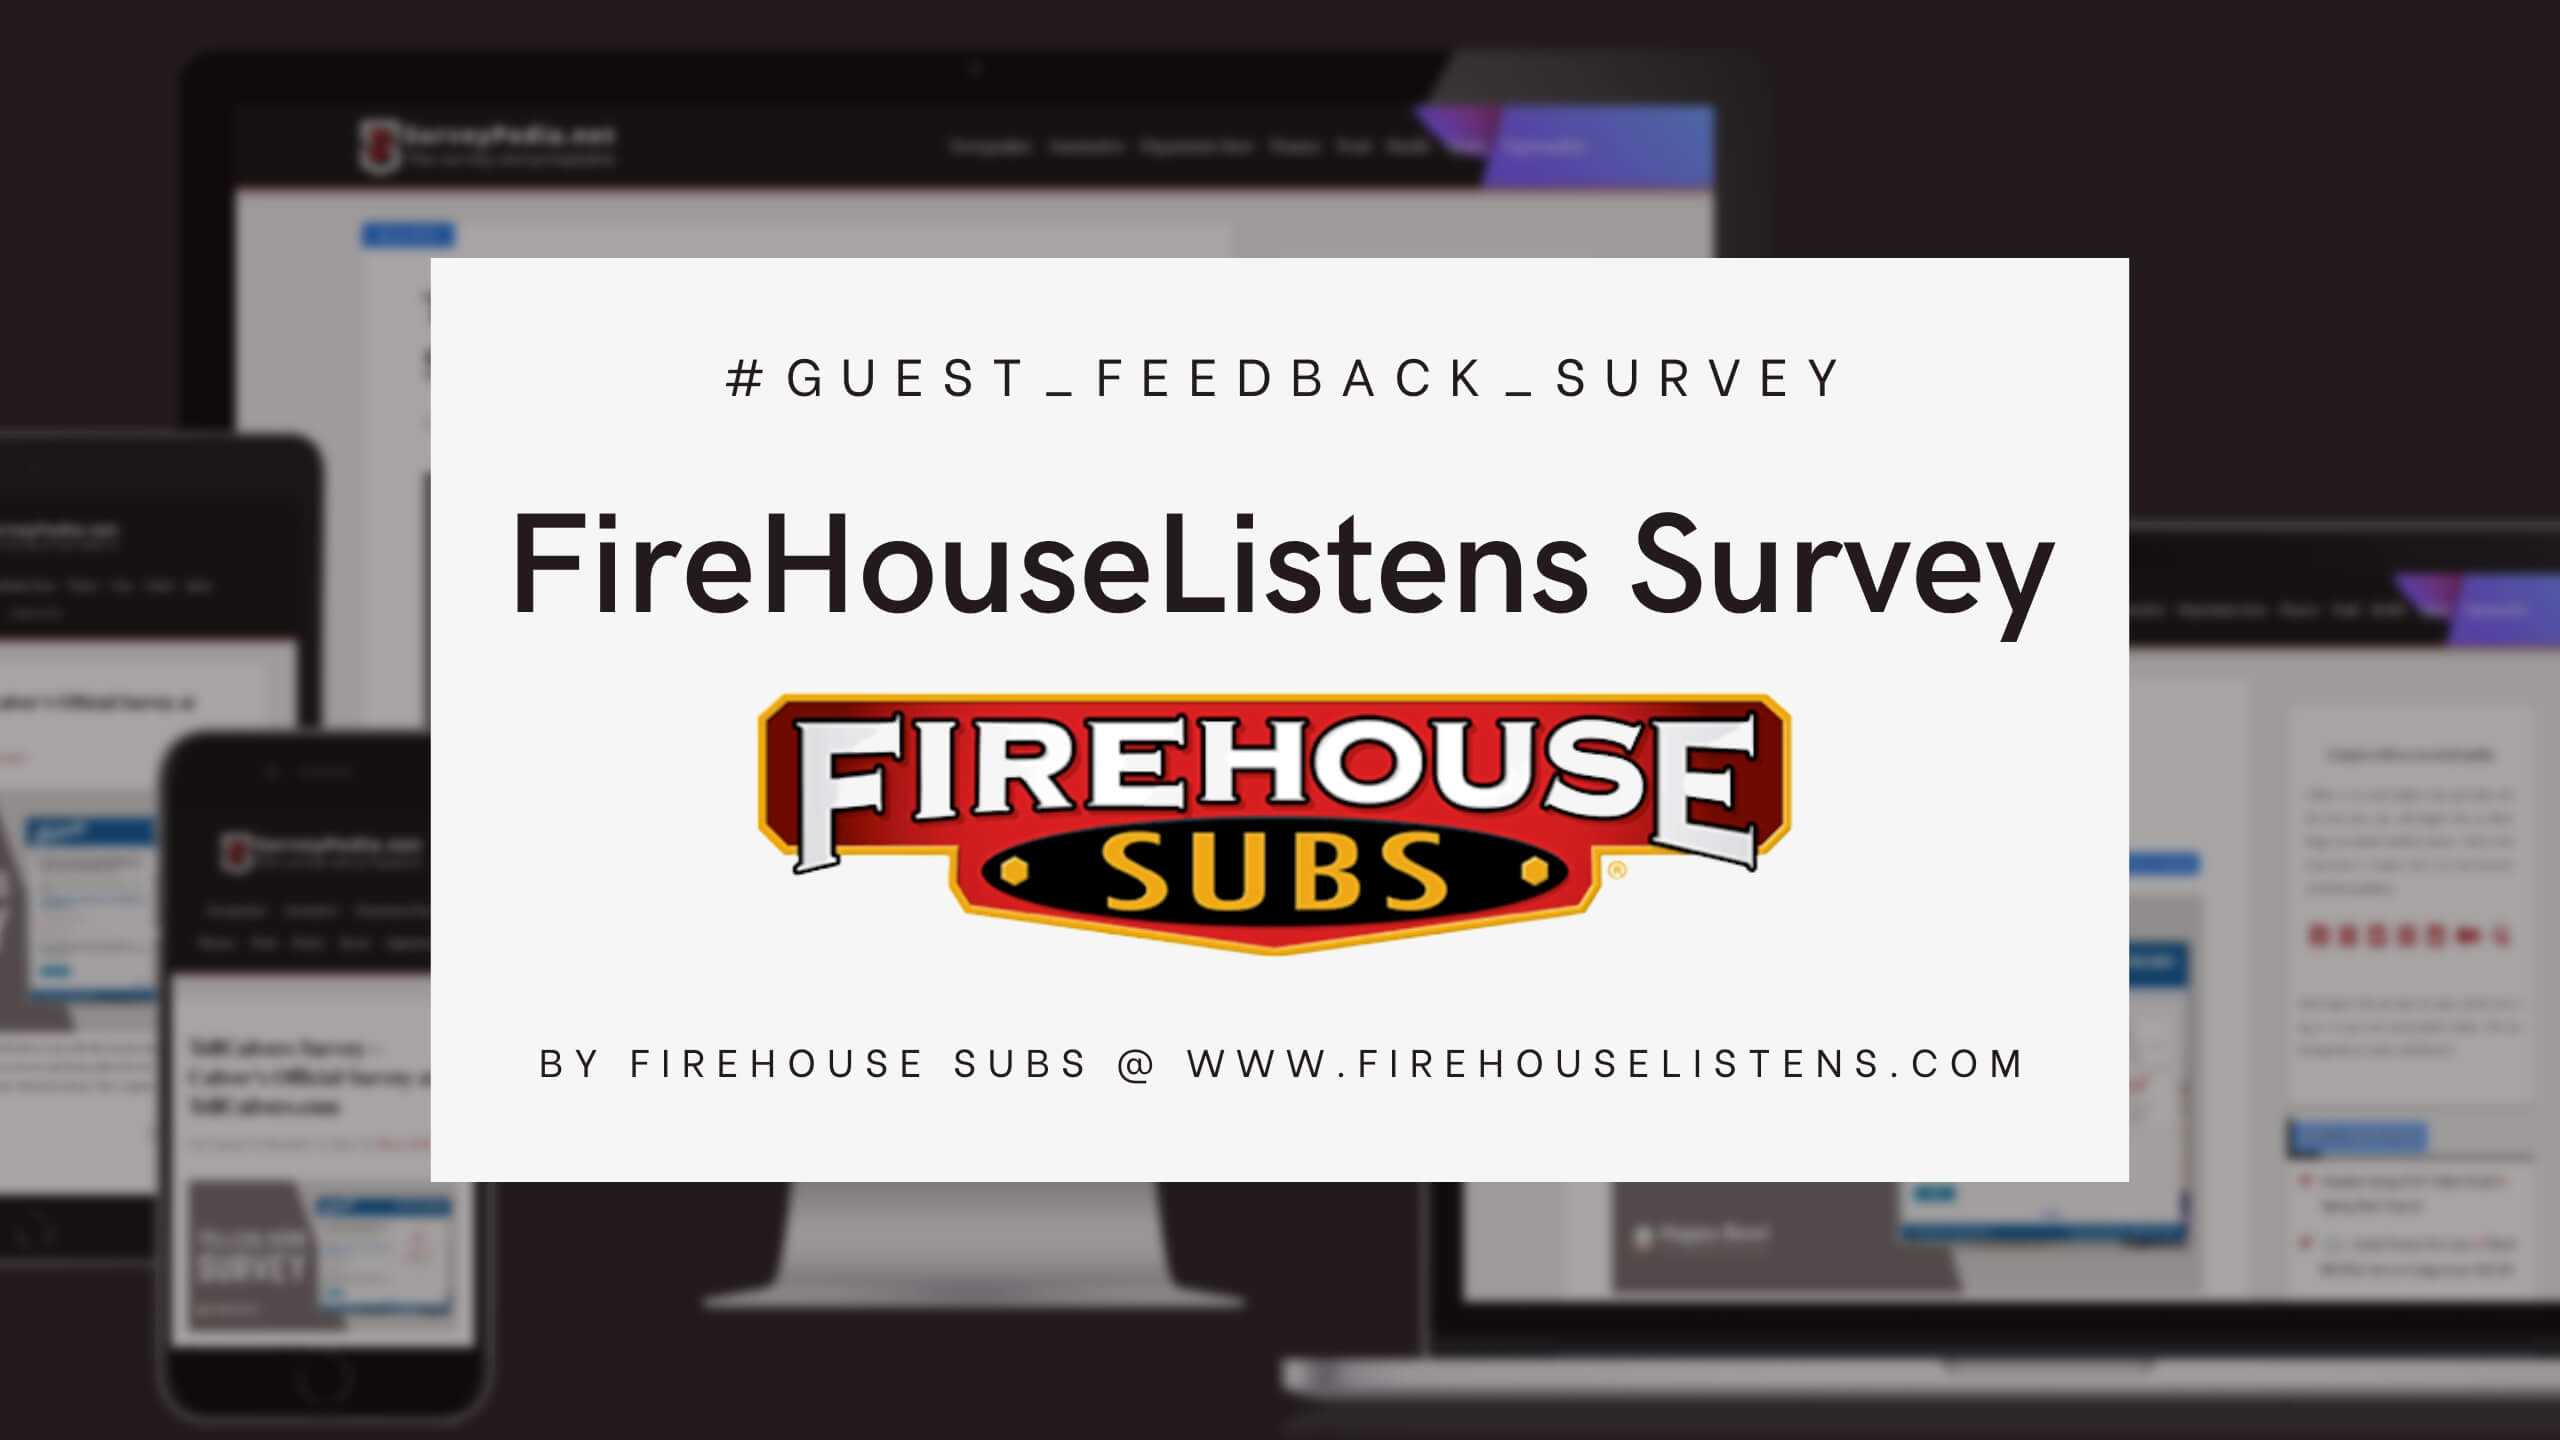 FireHouseListens Survey: FireHouse Subs Official Survey at www.FireHouseListens.com